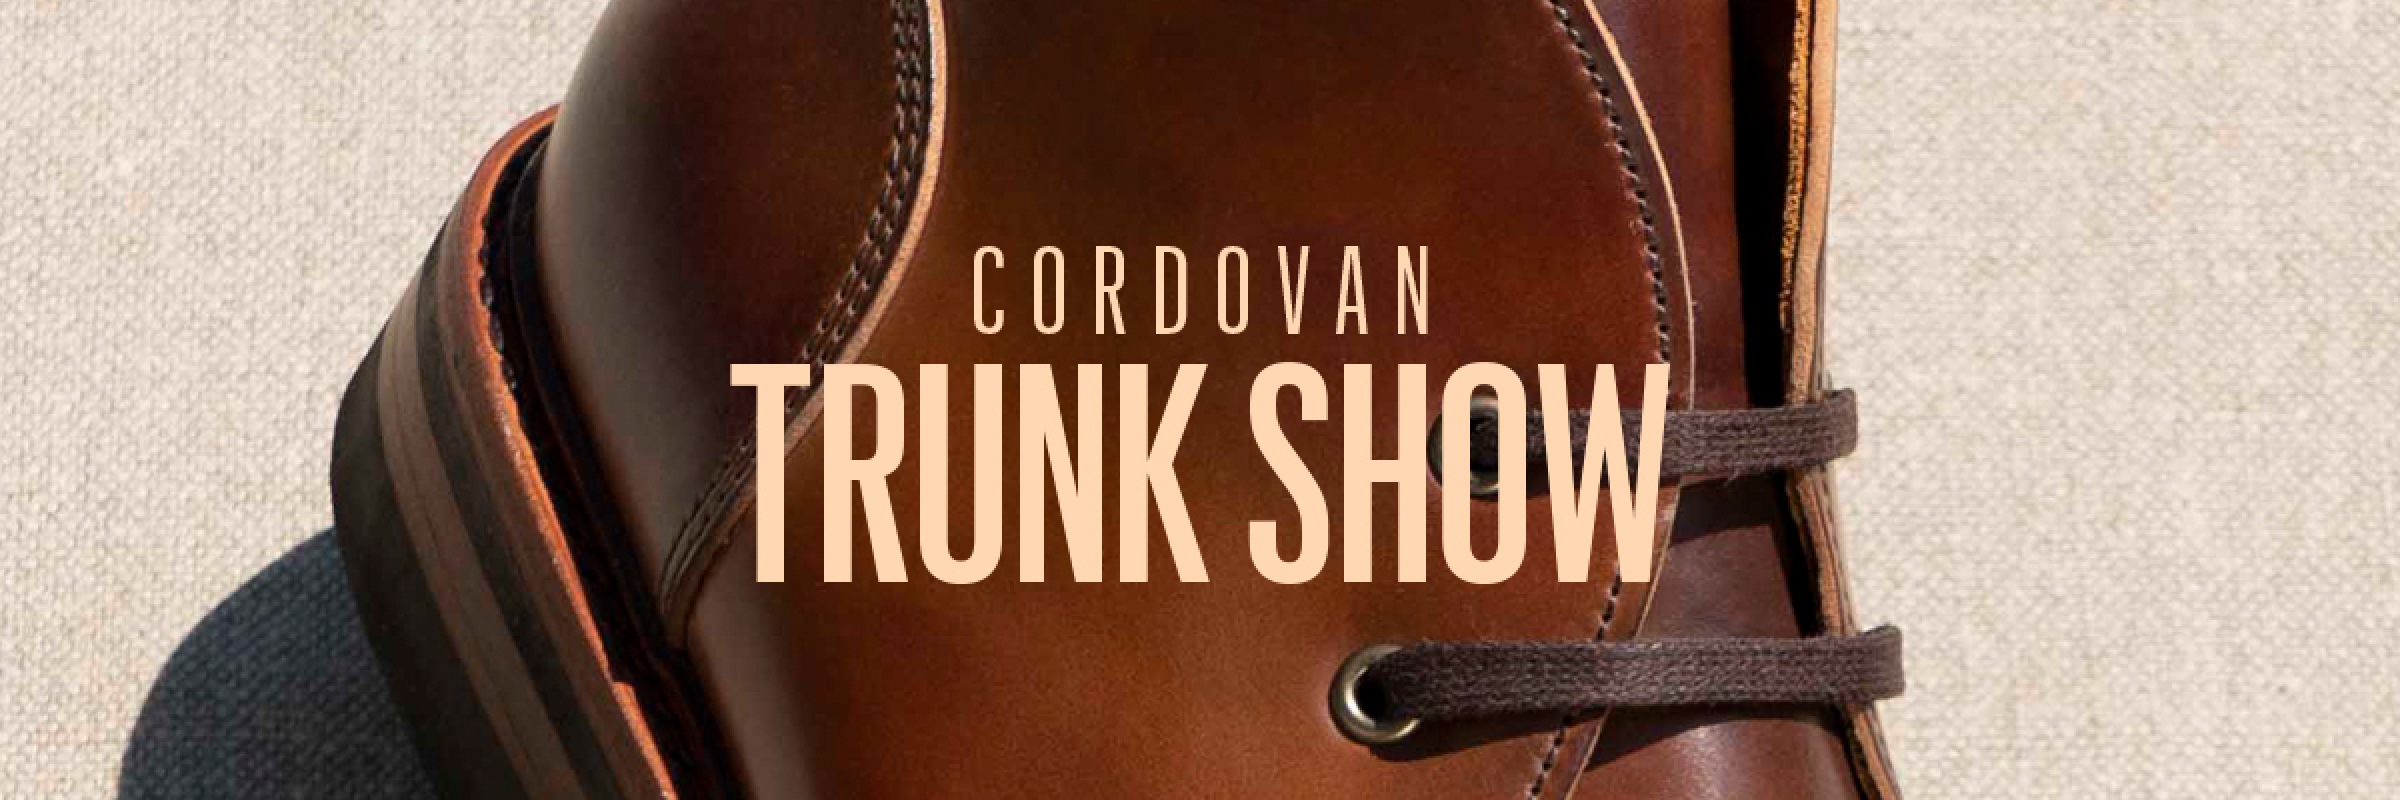 Cordovan Trunk Show